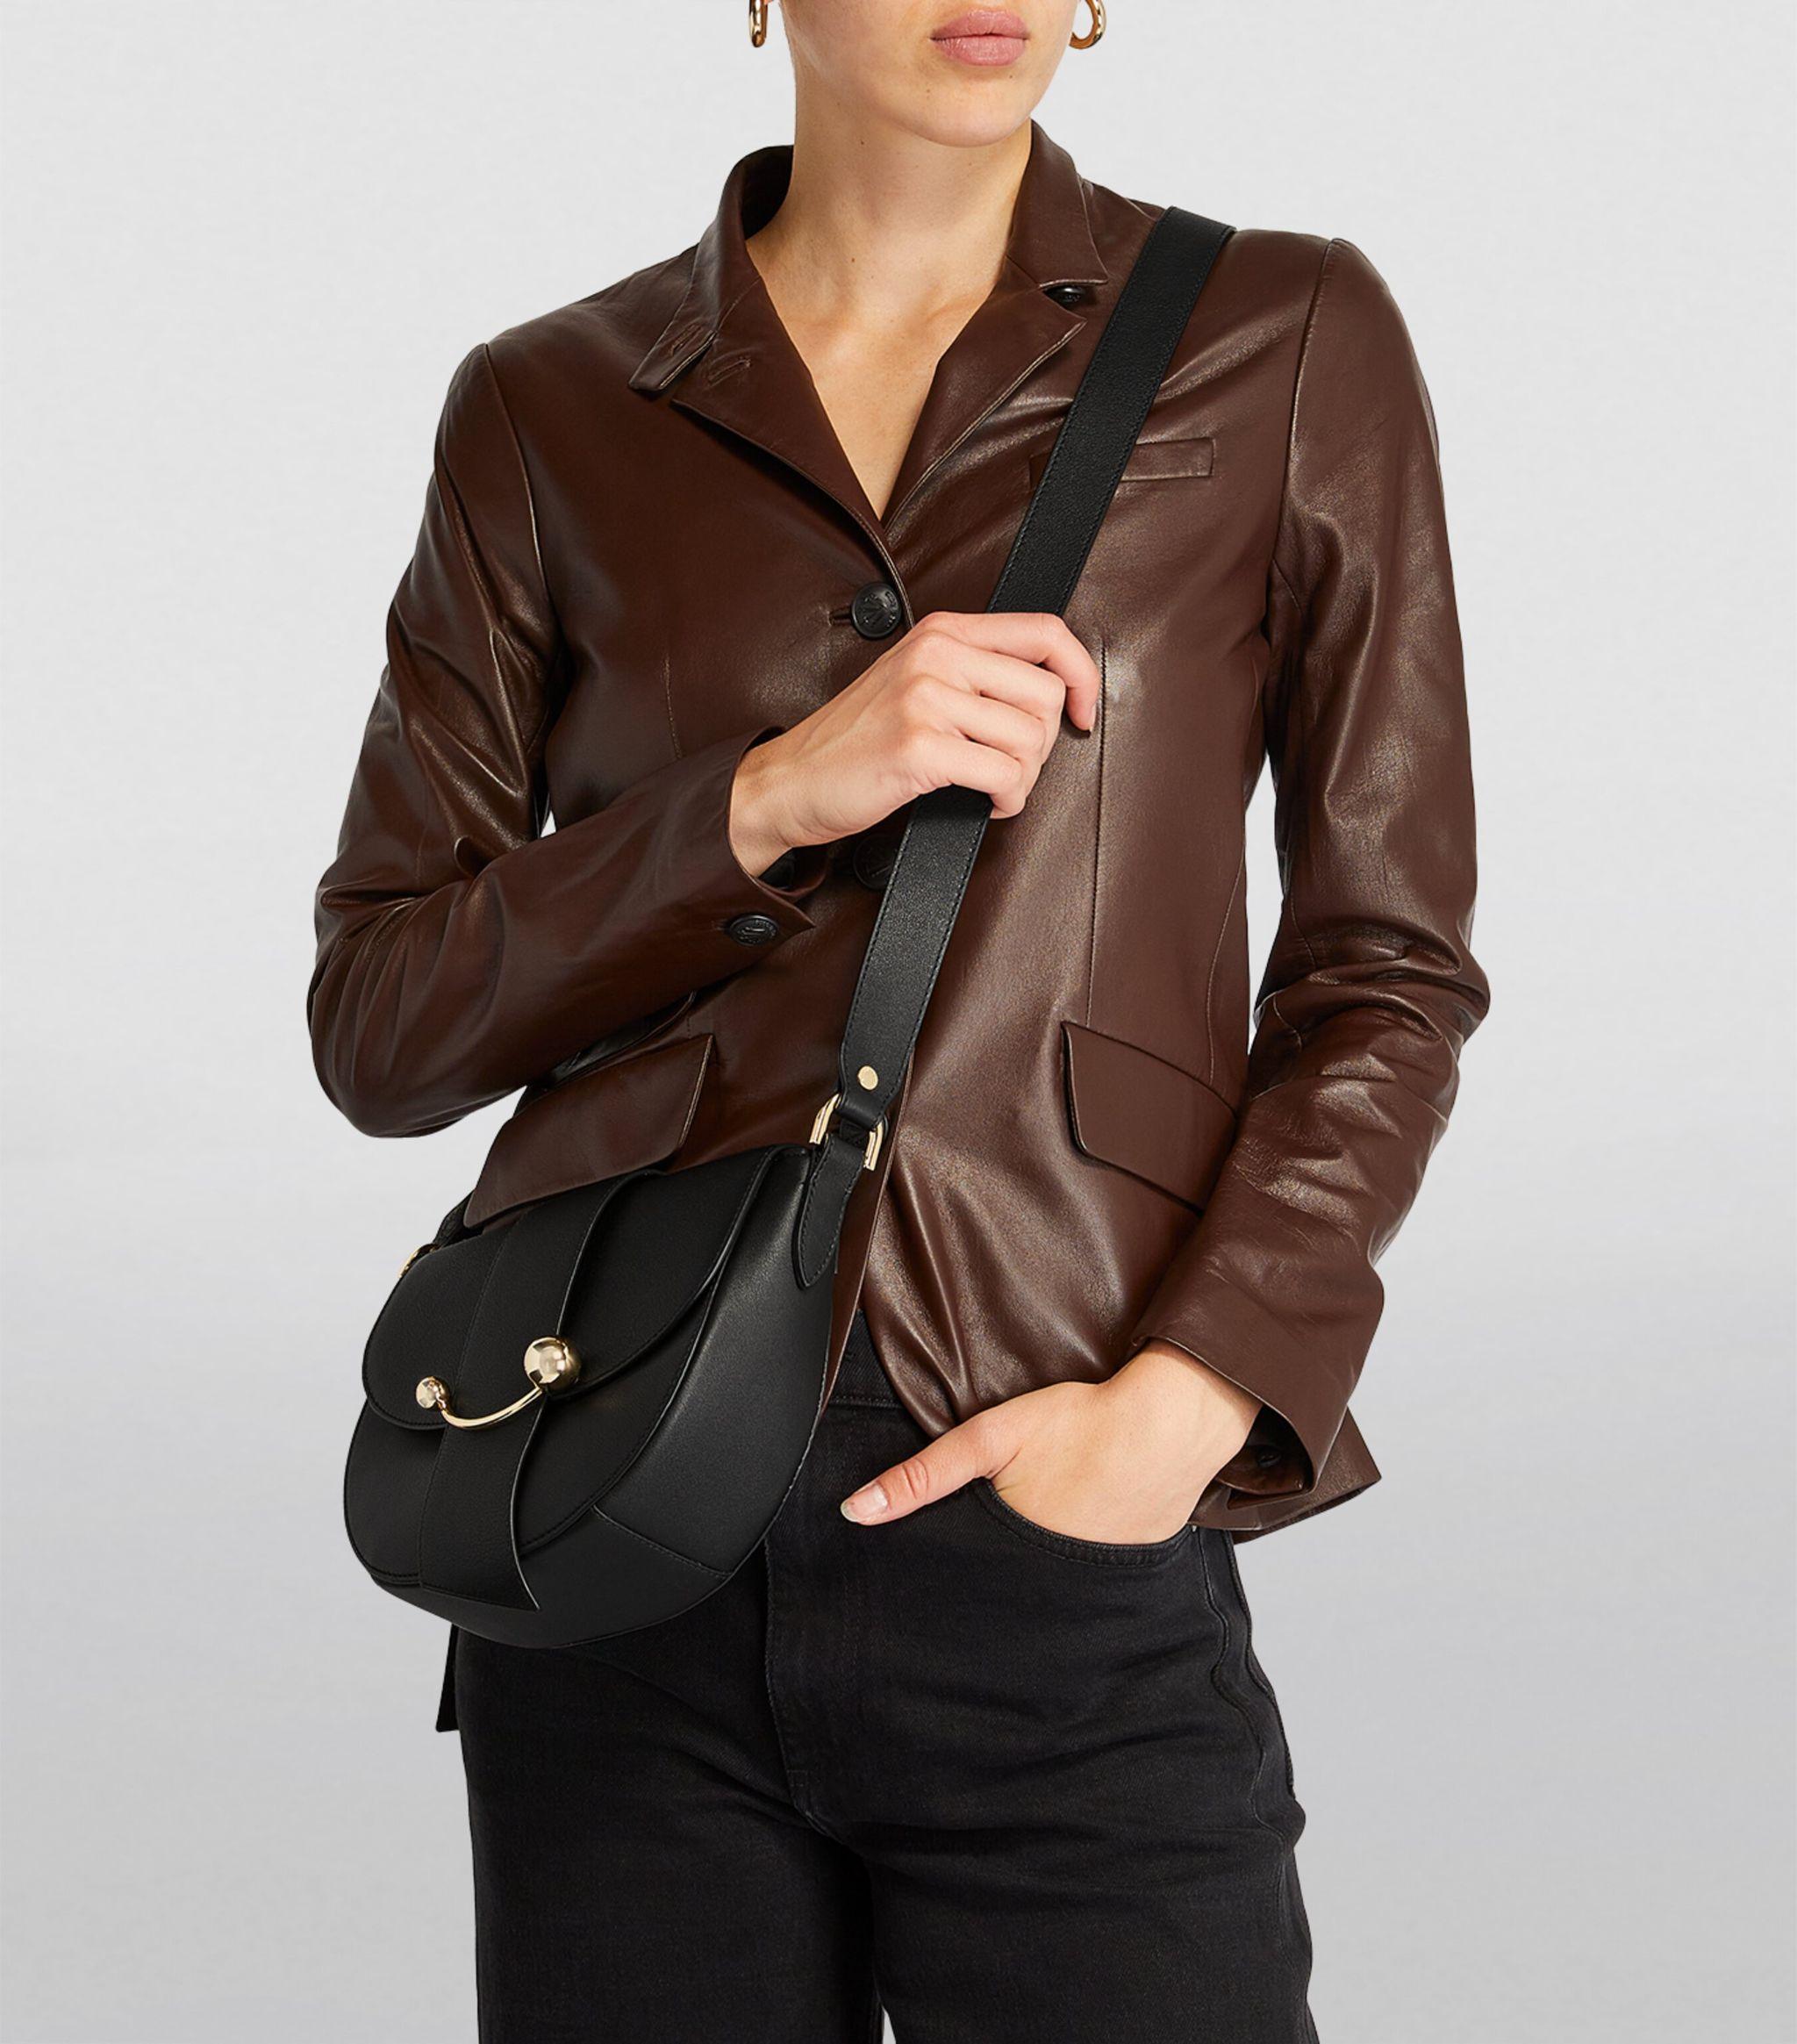 Strathberry Crescent Leather Shoulder Bag, Bags